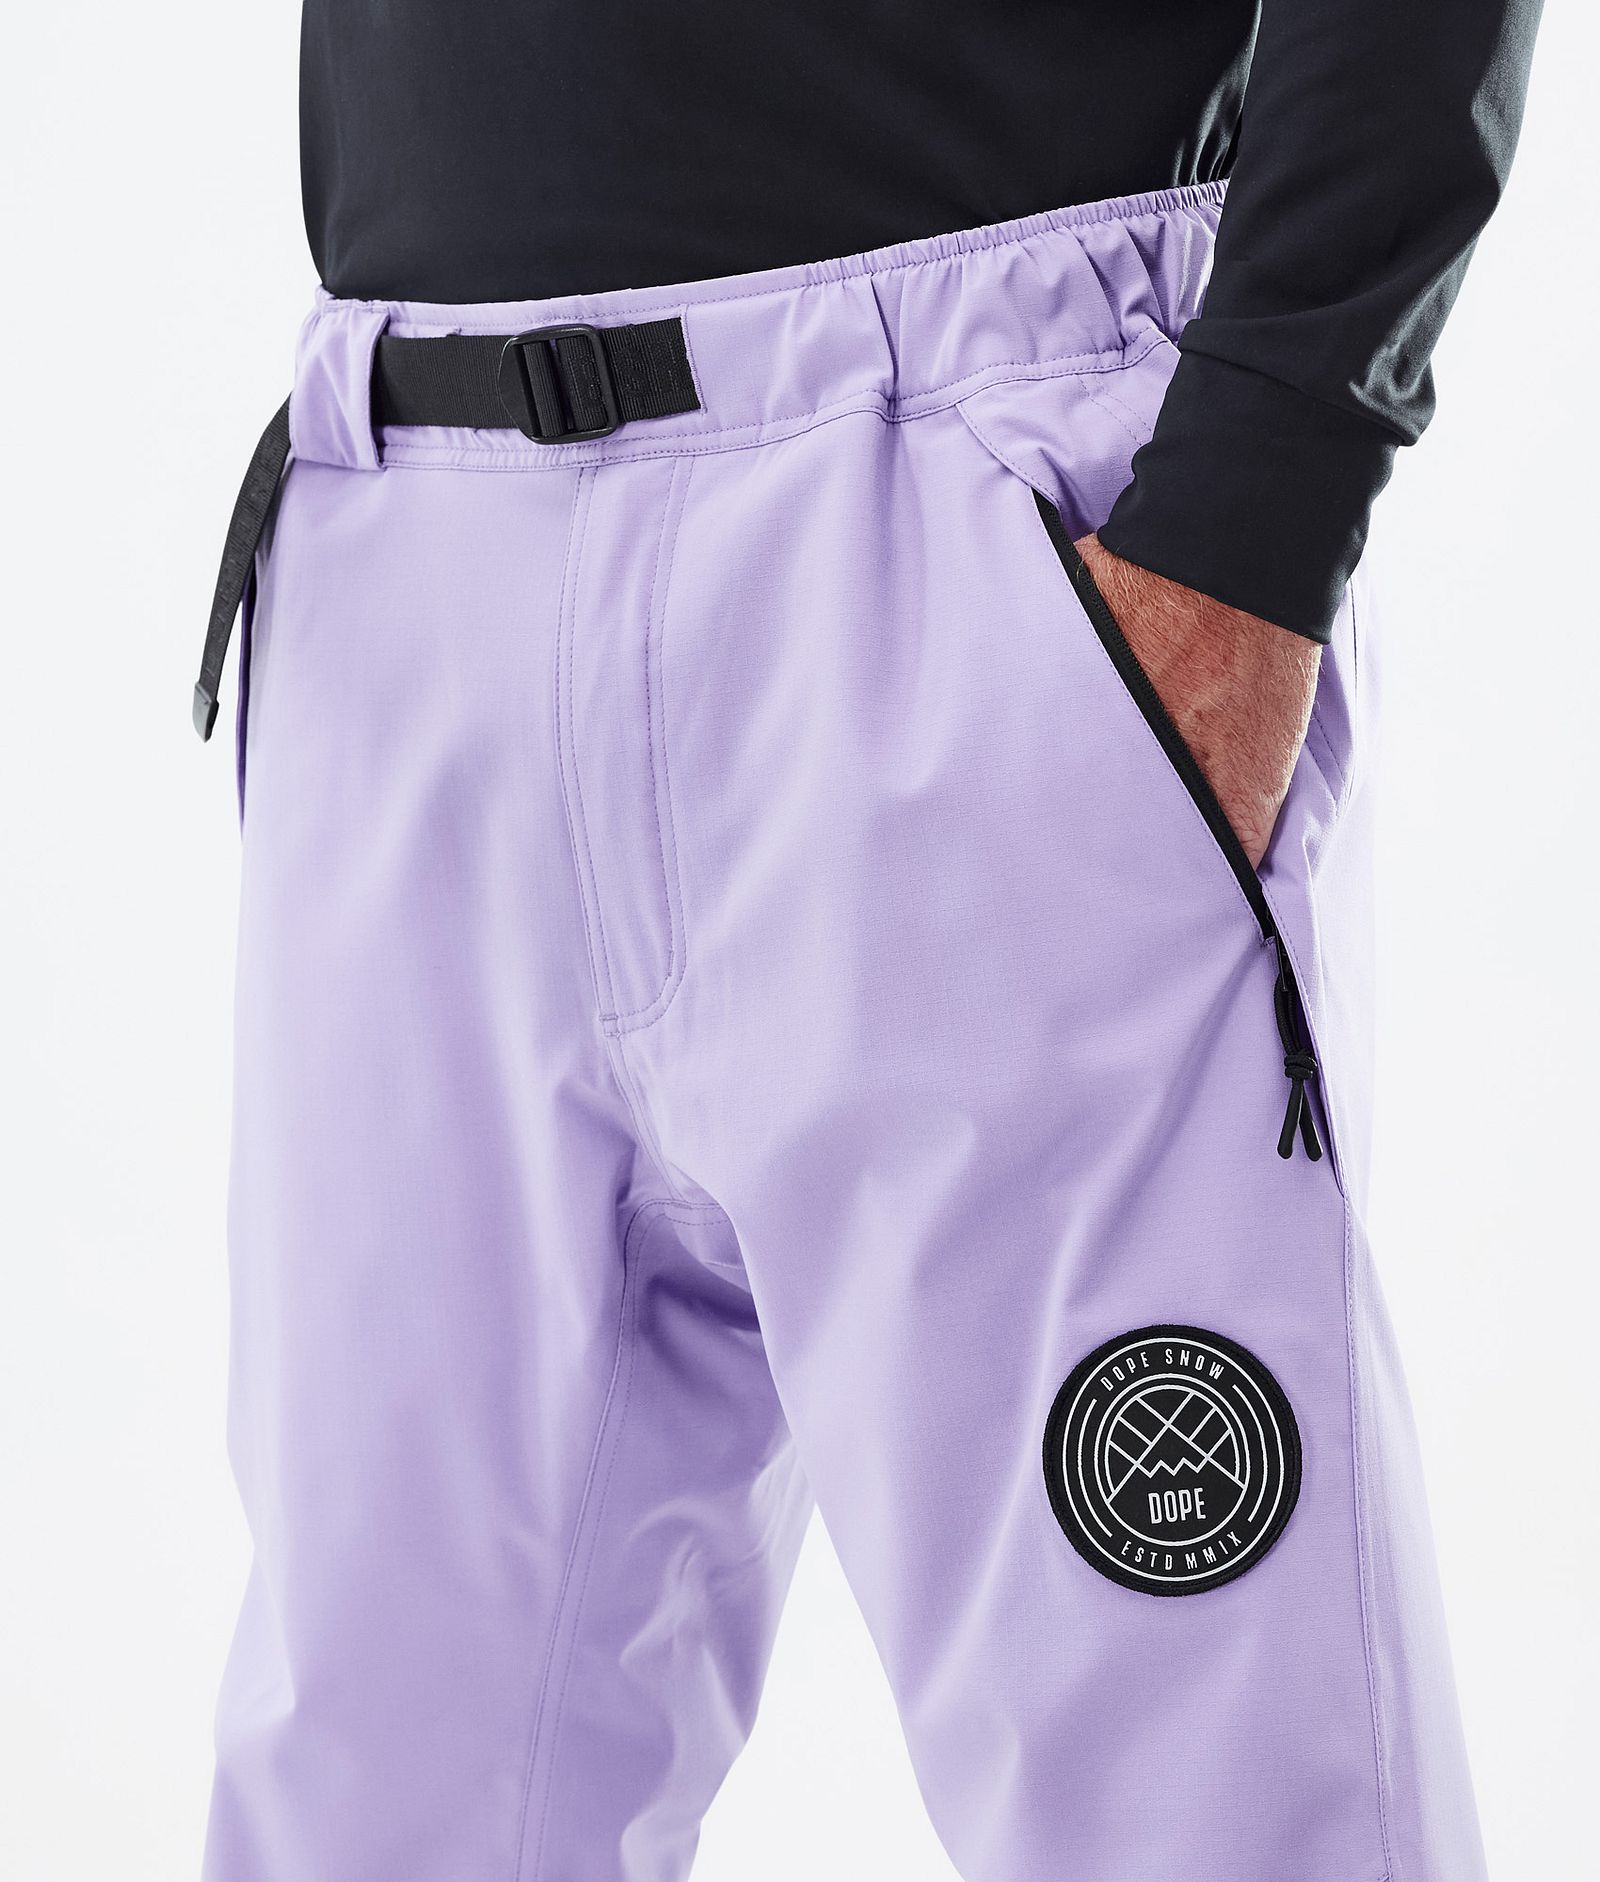 Blizzard 2022 Pantaloni Sci Uomo Faded violet